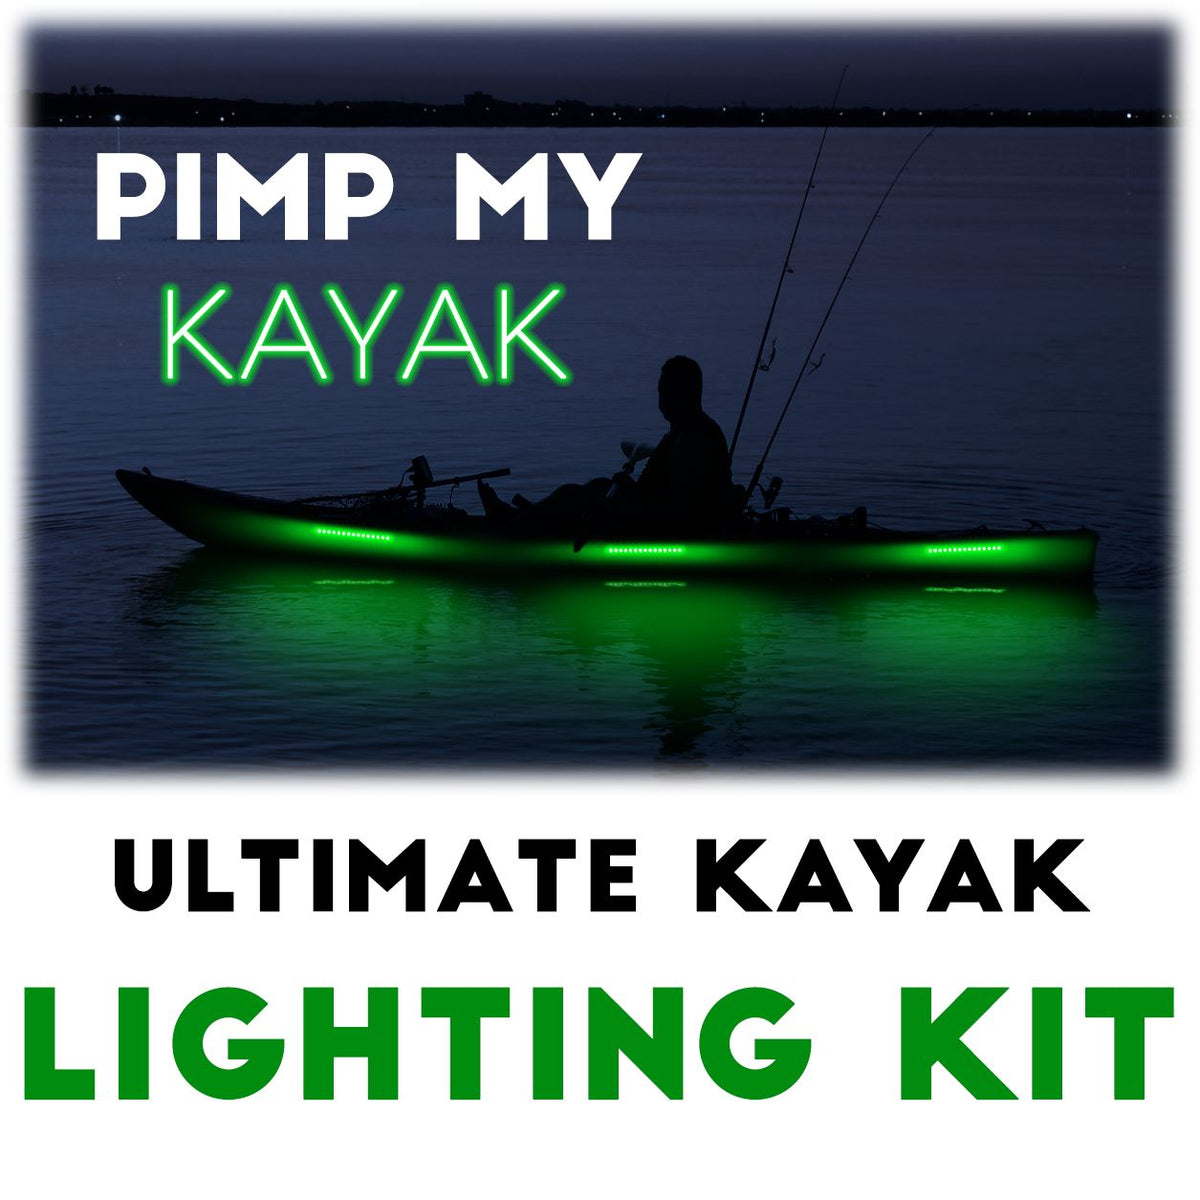 Pimp My Kayak - Green LED Lighting DIY Kit - 30,000 Lumens - Includes Red &amp; Green Navigation Lights Pimp My Kayak Green Blob Outdoors 